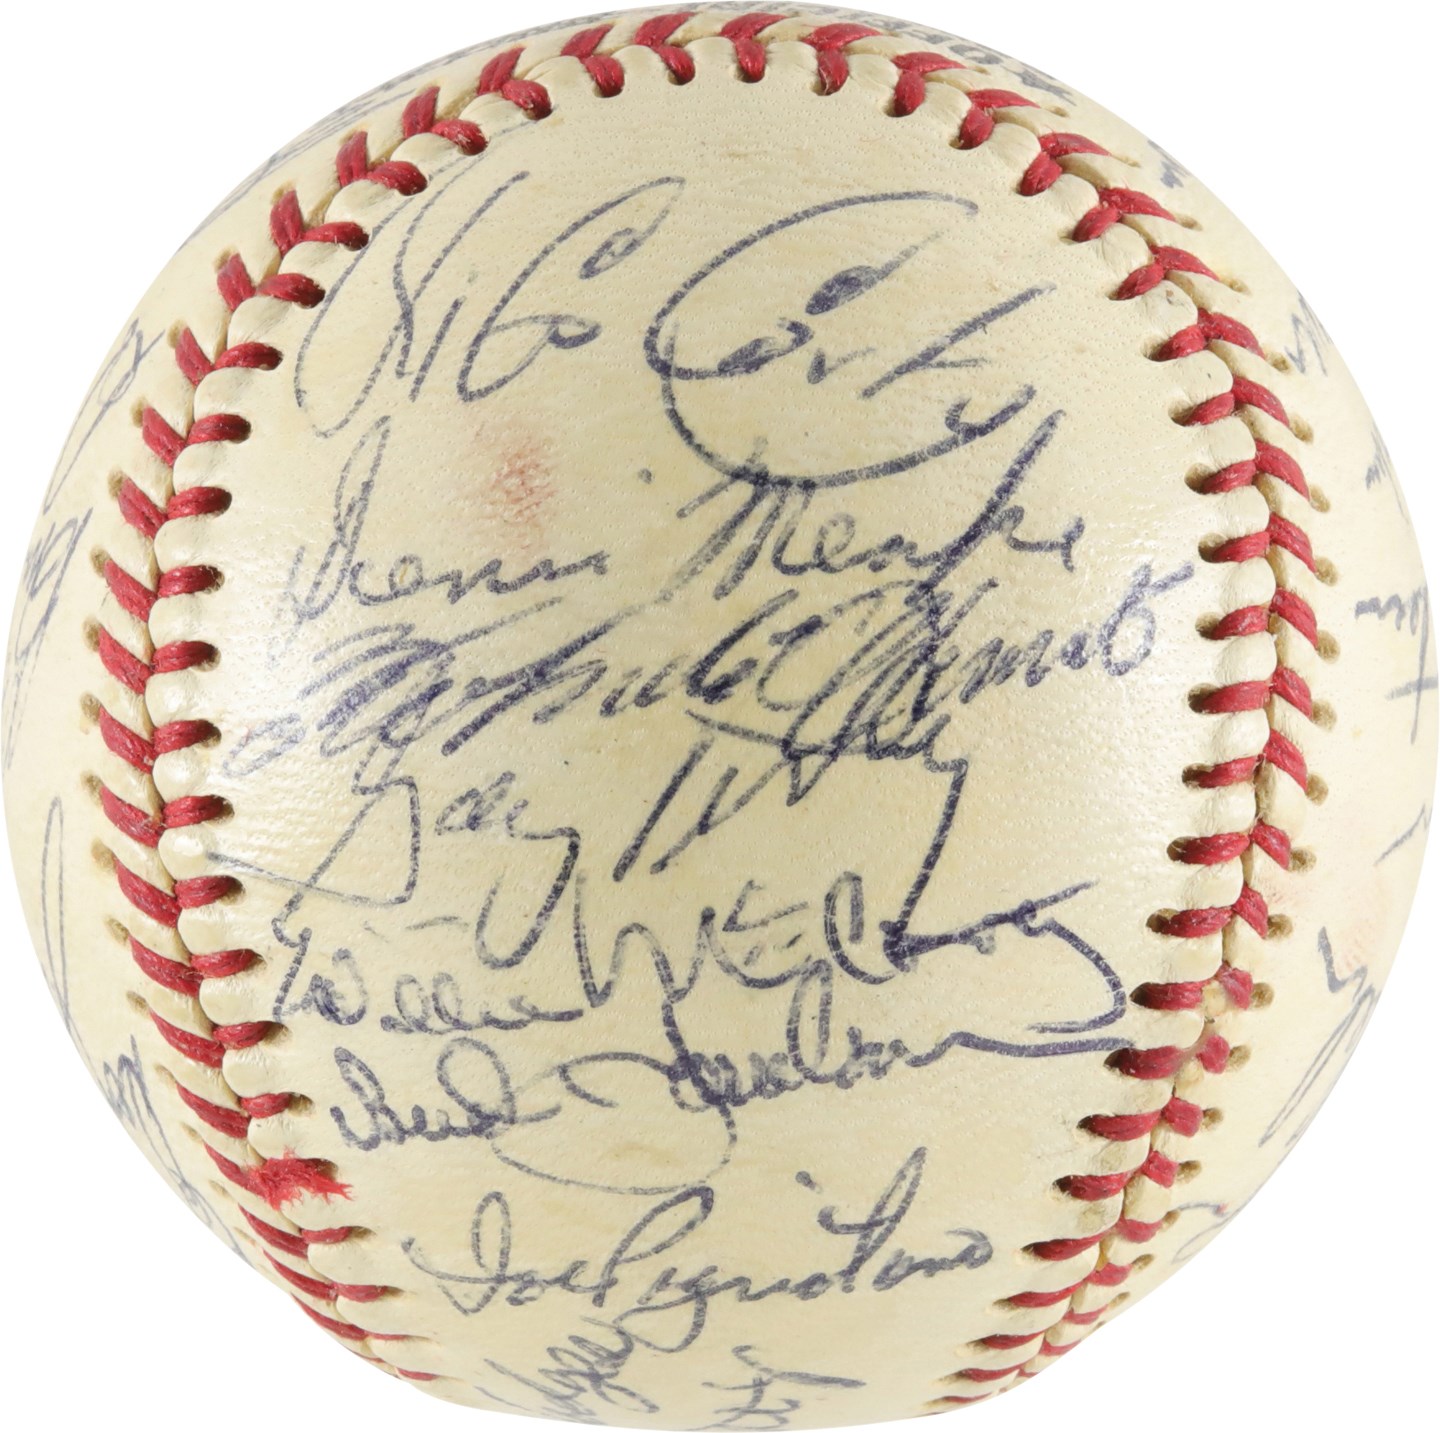 Baseball Autographs - High Grade 1970 National League All Star Team Signed Baseball w/Roberto Clemente (PSA)